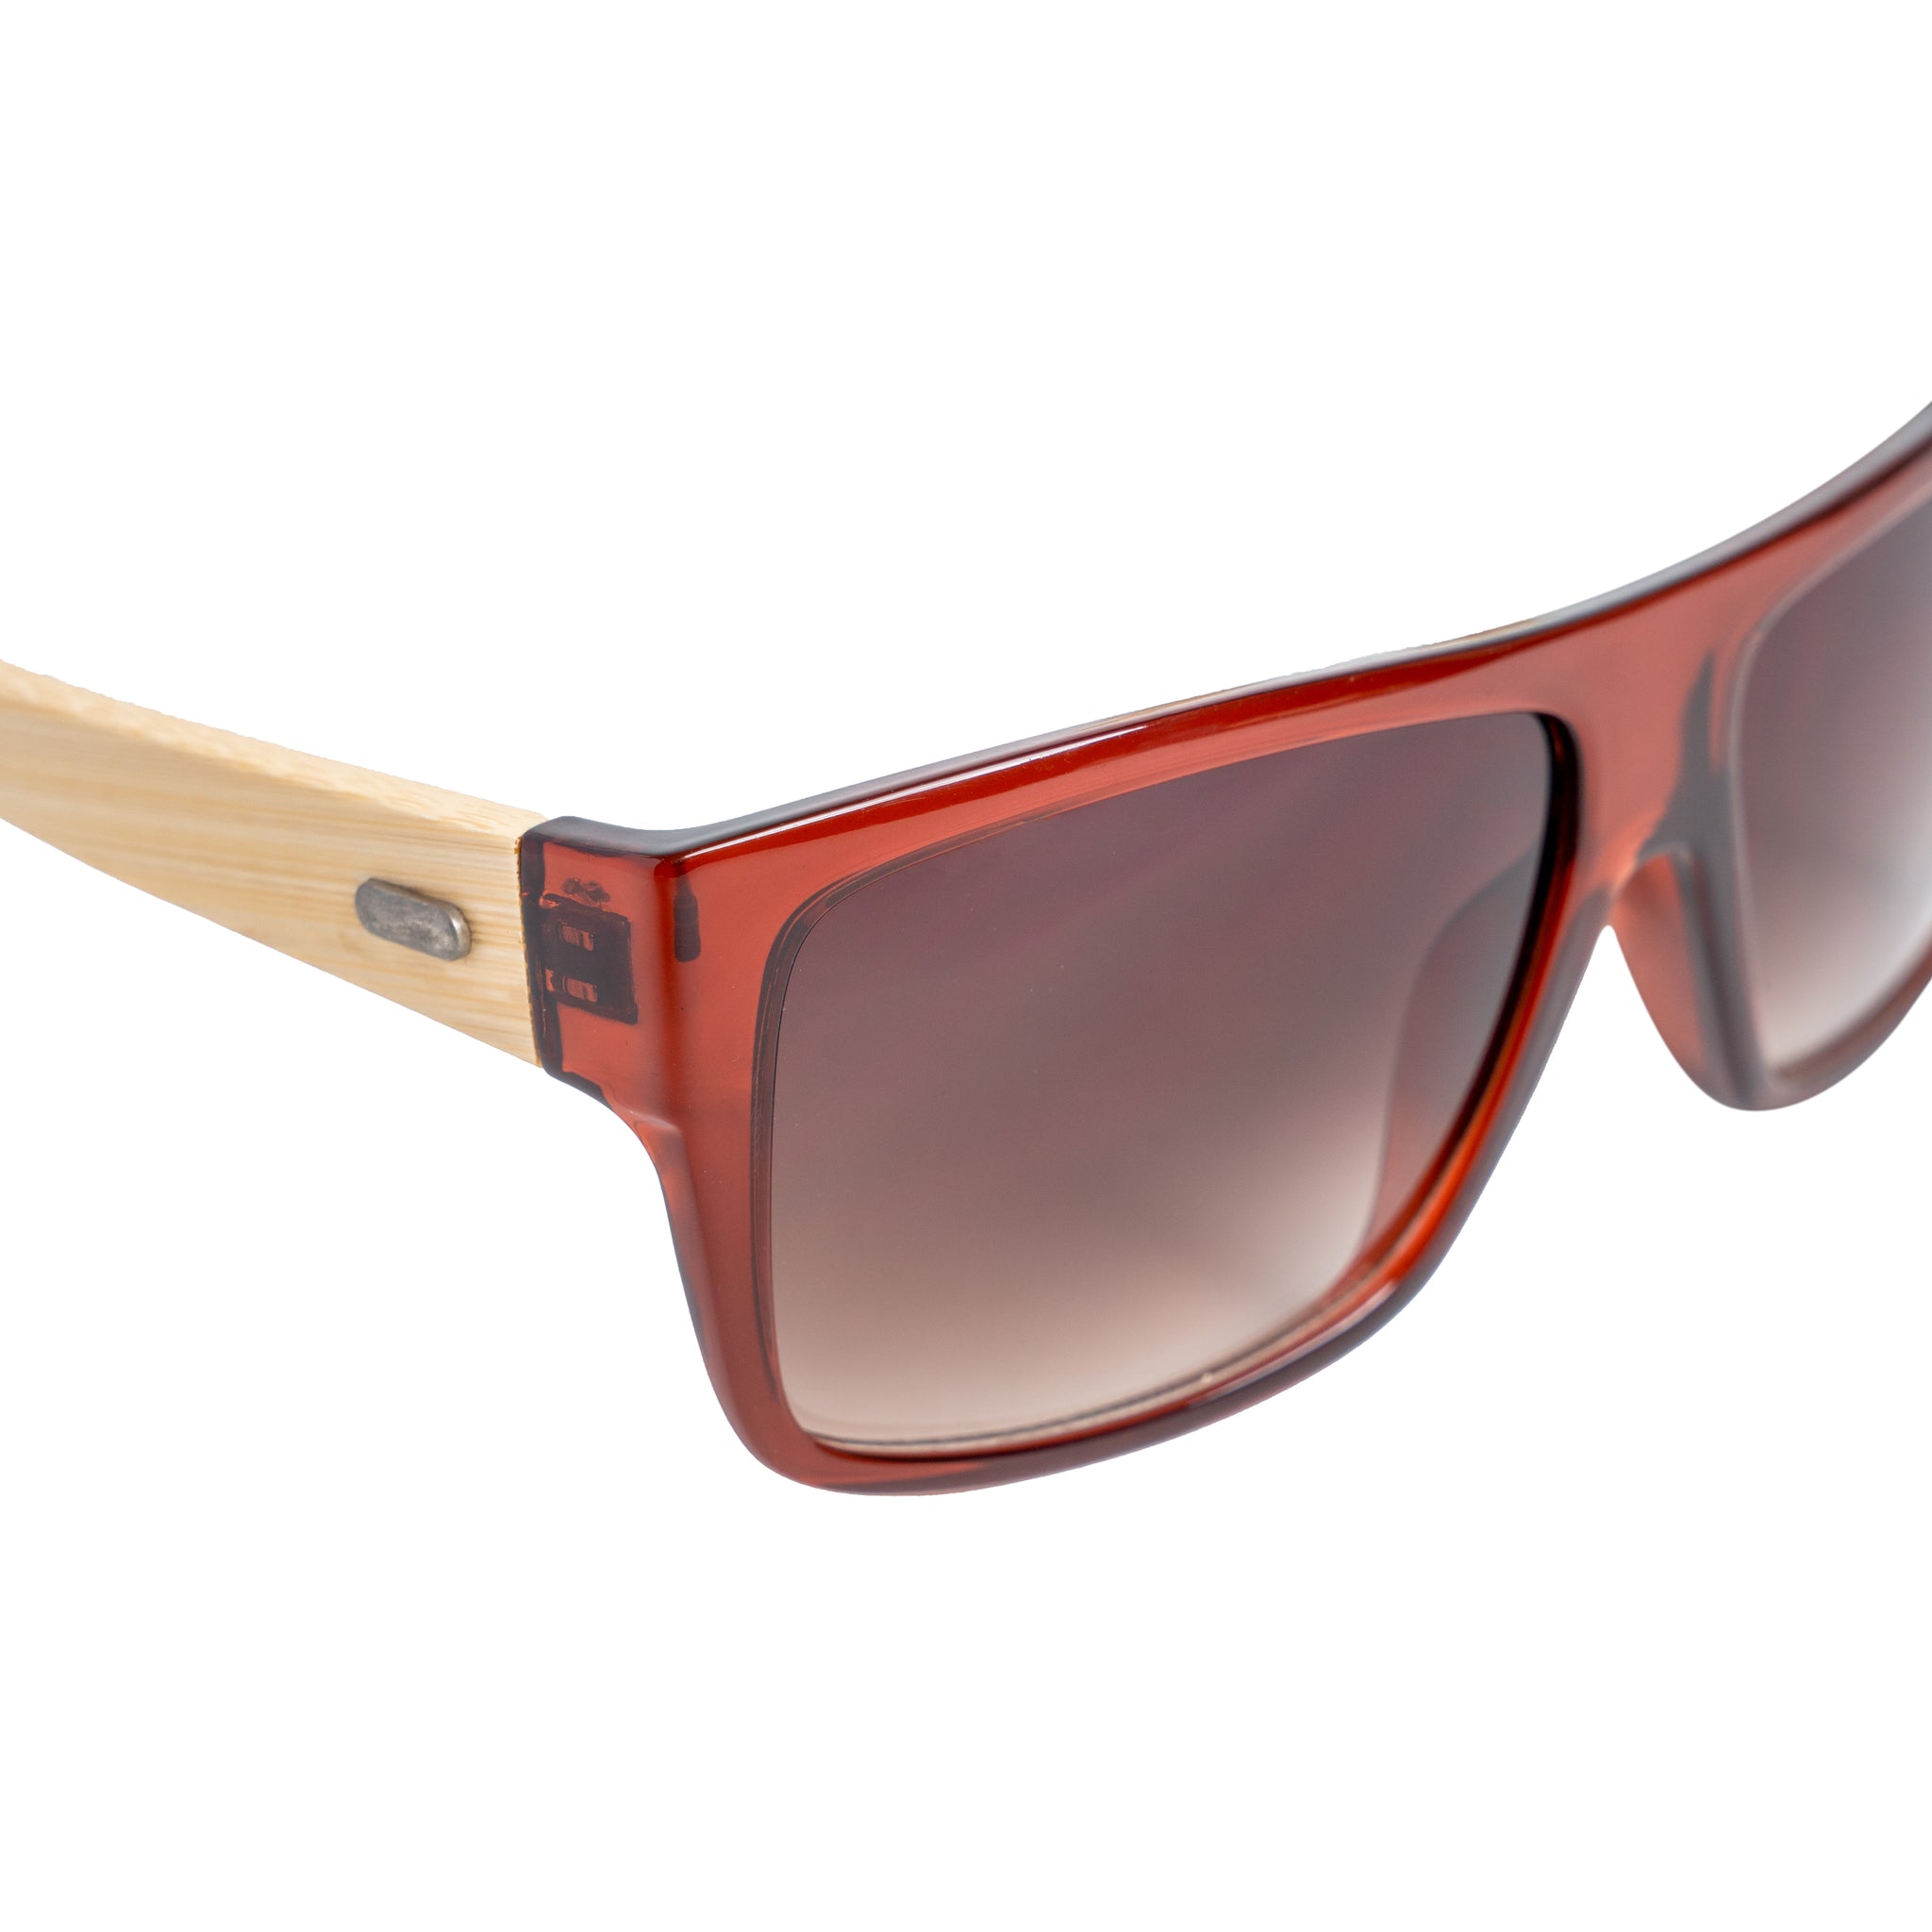 Chokore Iconic Wayfarer Sunglasses (Wood & Brown)